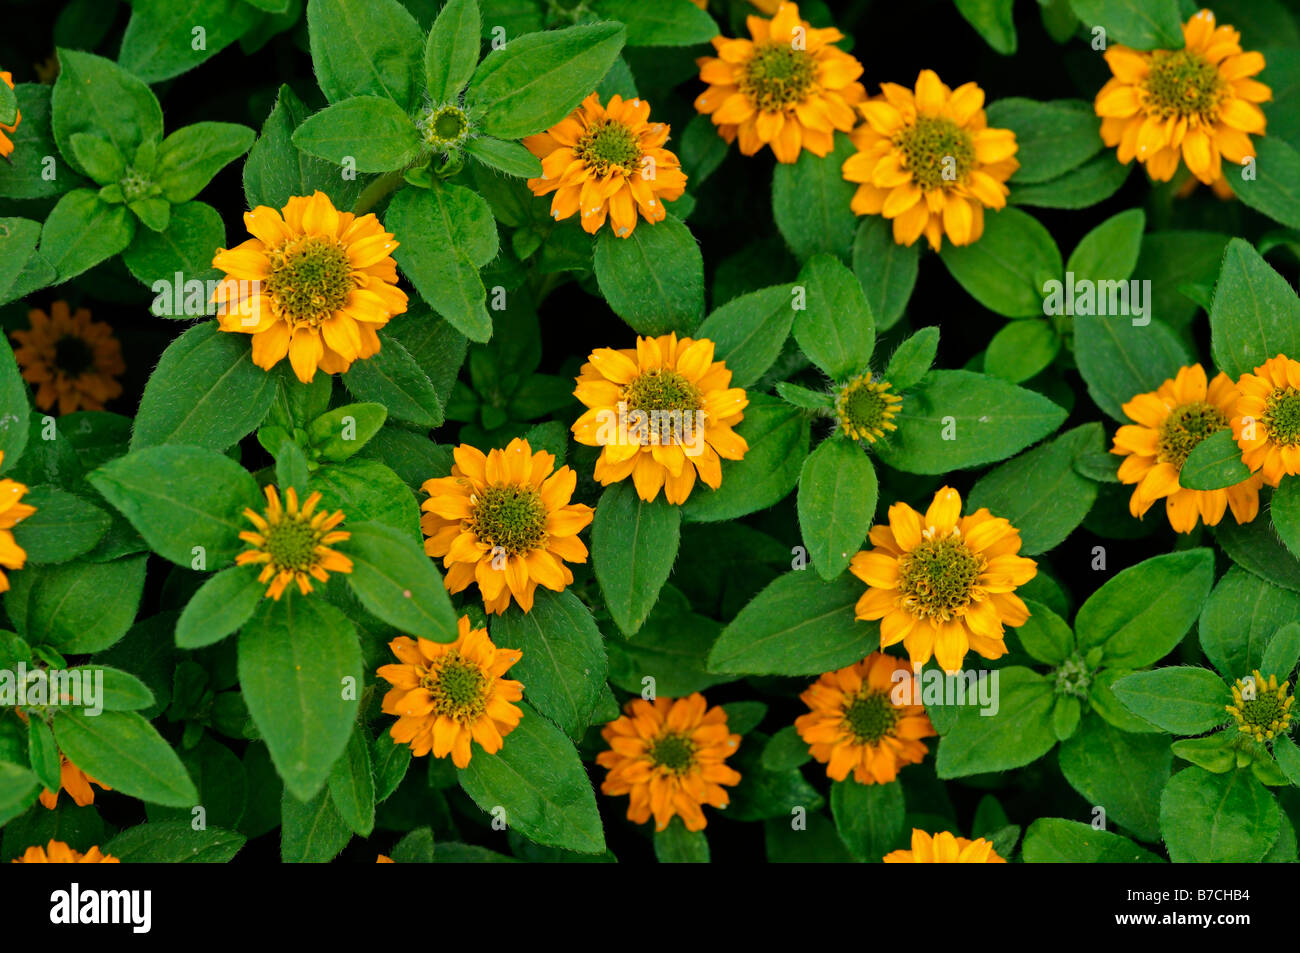 Sanvitalia procumbens cultivar irish eyes profuse profusion flower flowers bloom golden orange color colour green eye Stock Photo